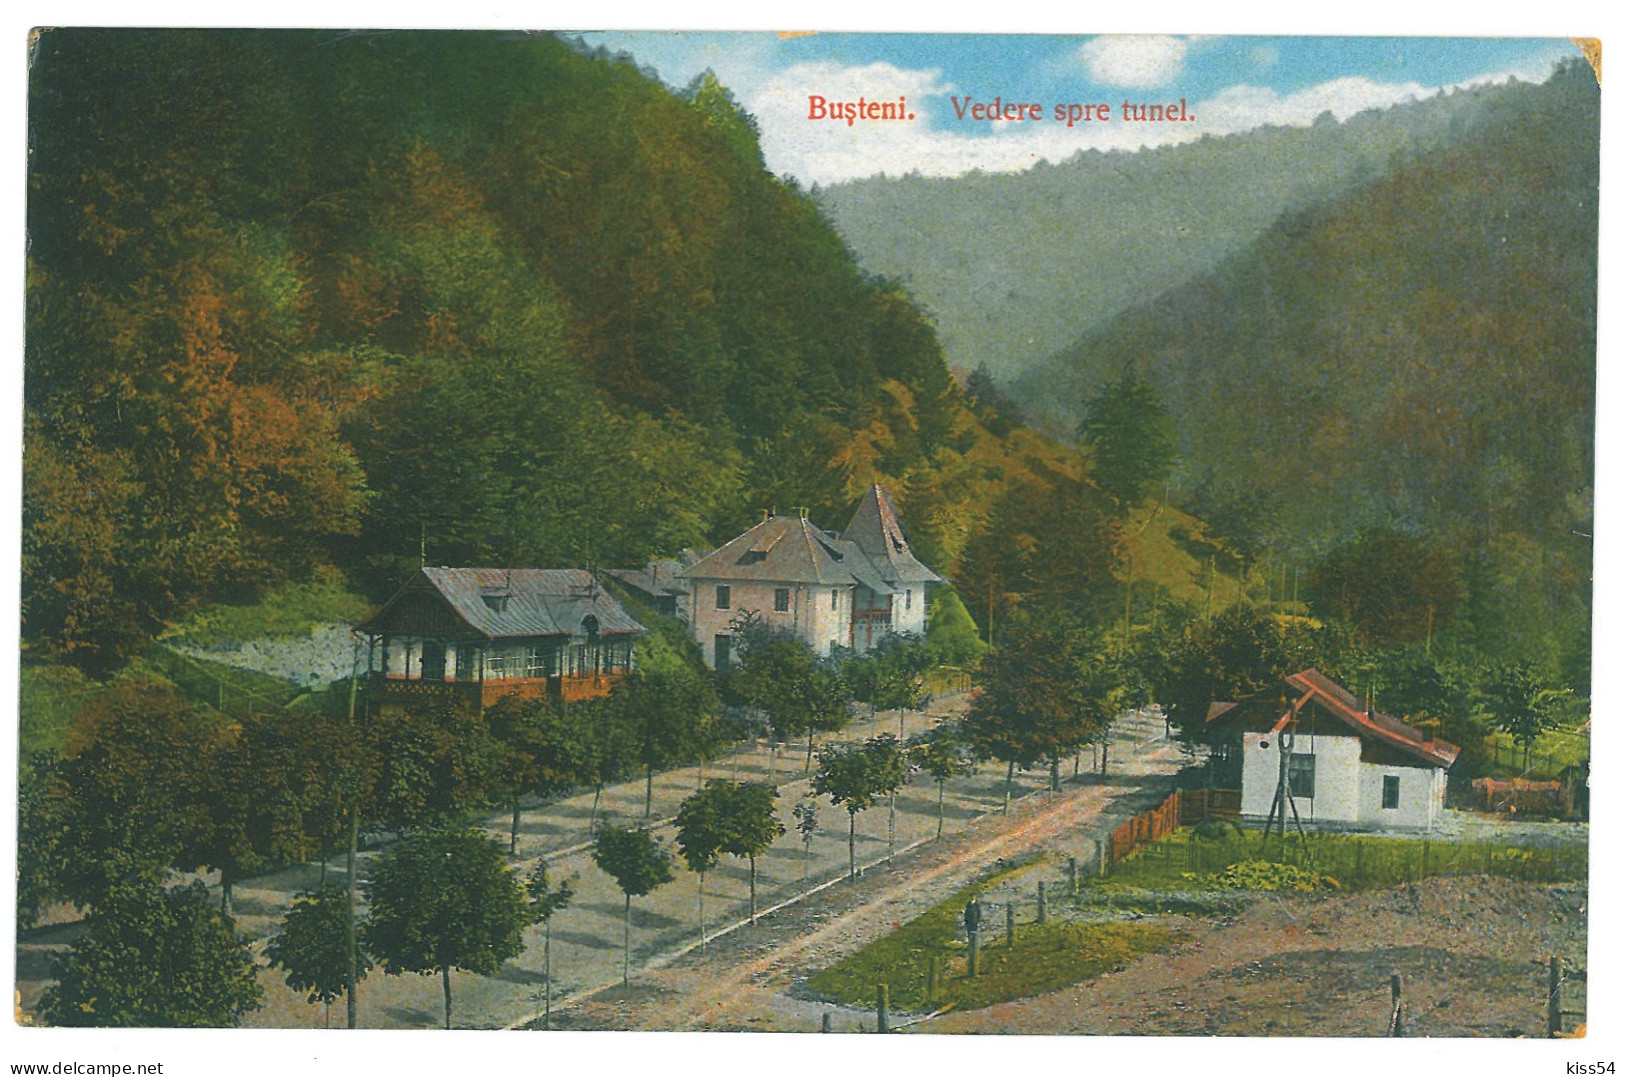 RO 81 - 22363 BUSTENI, Prahova, Romania - Old Postcard - Unused - Roumanie